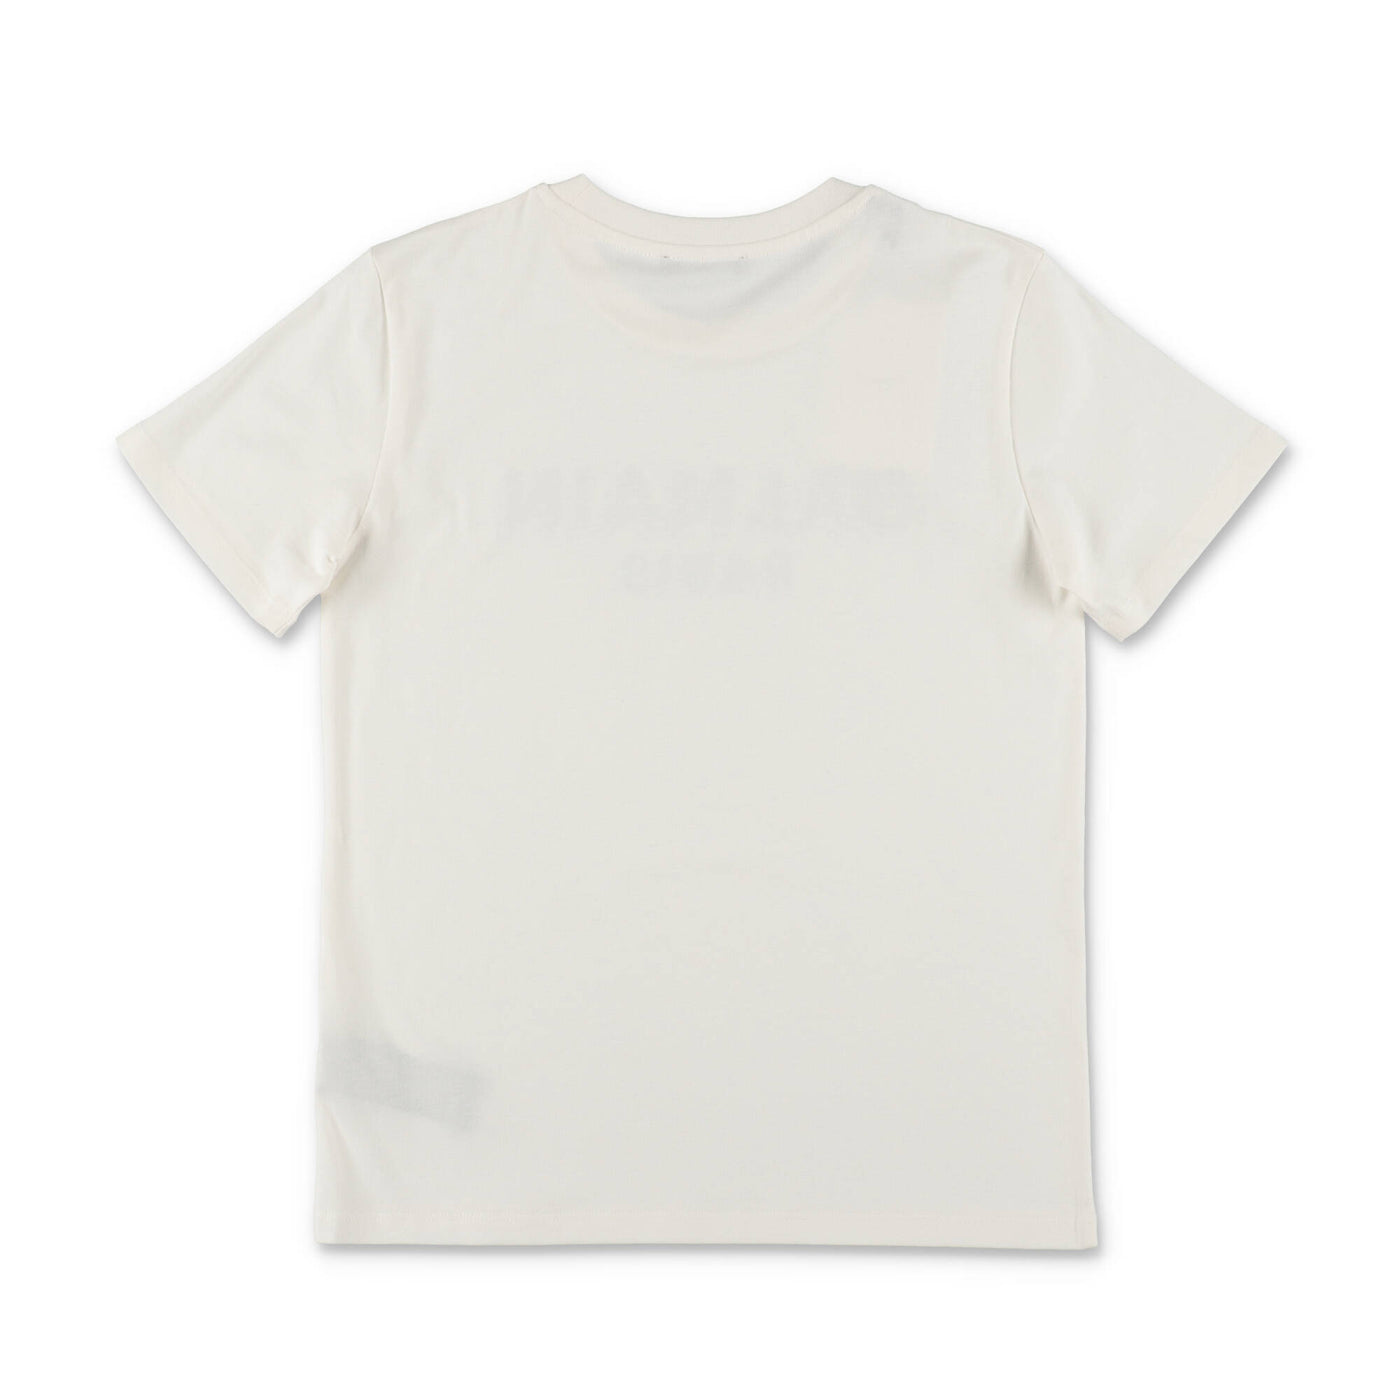 White cotton jersey boy BALMAIN t-shirt - Carofiglio Junior